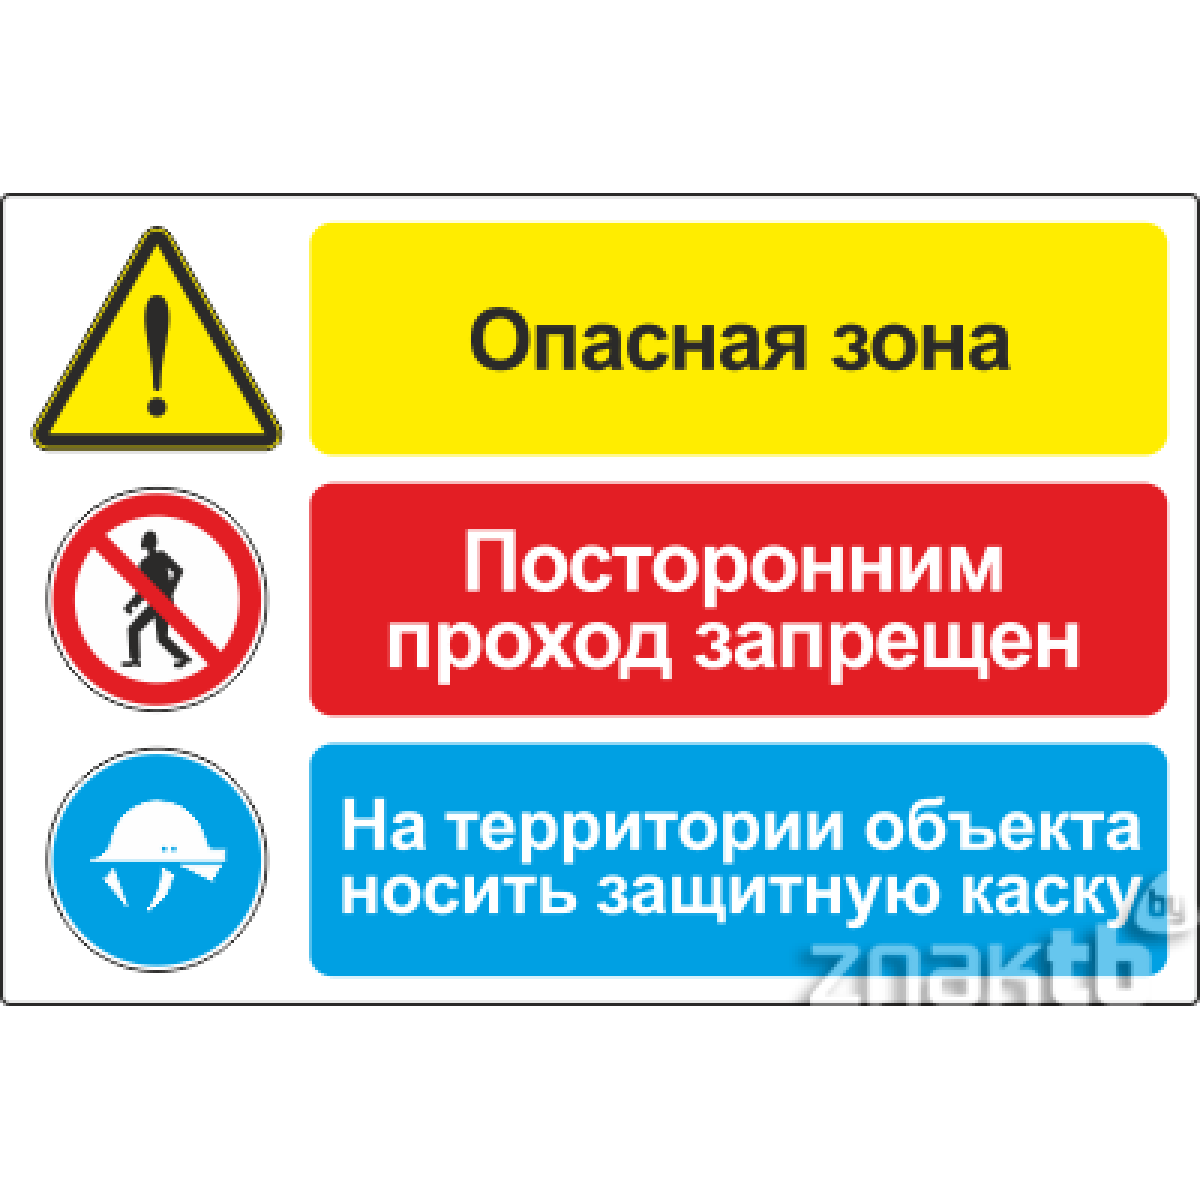 Плакат со знаками со знаками Опасная зона. Посторонним проход запрещен. На территории объекта носить защитную каску